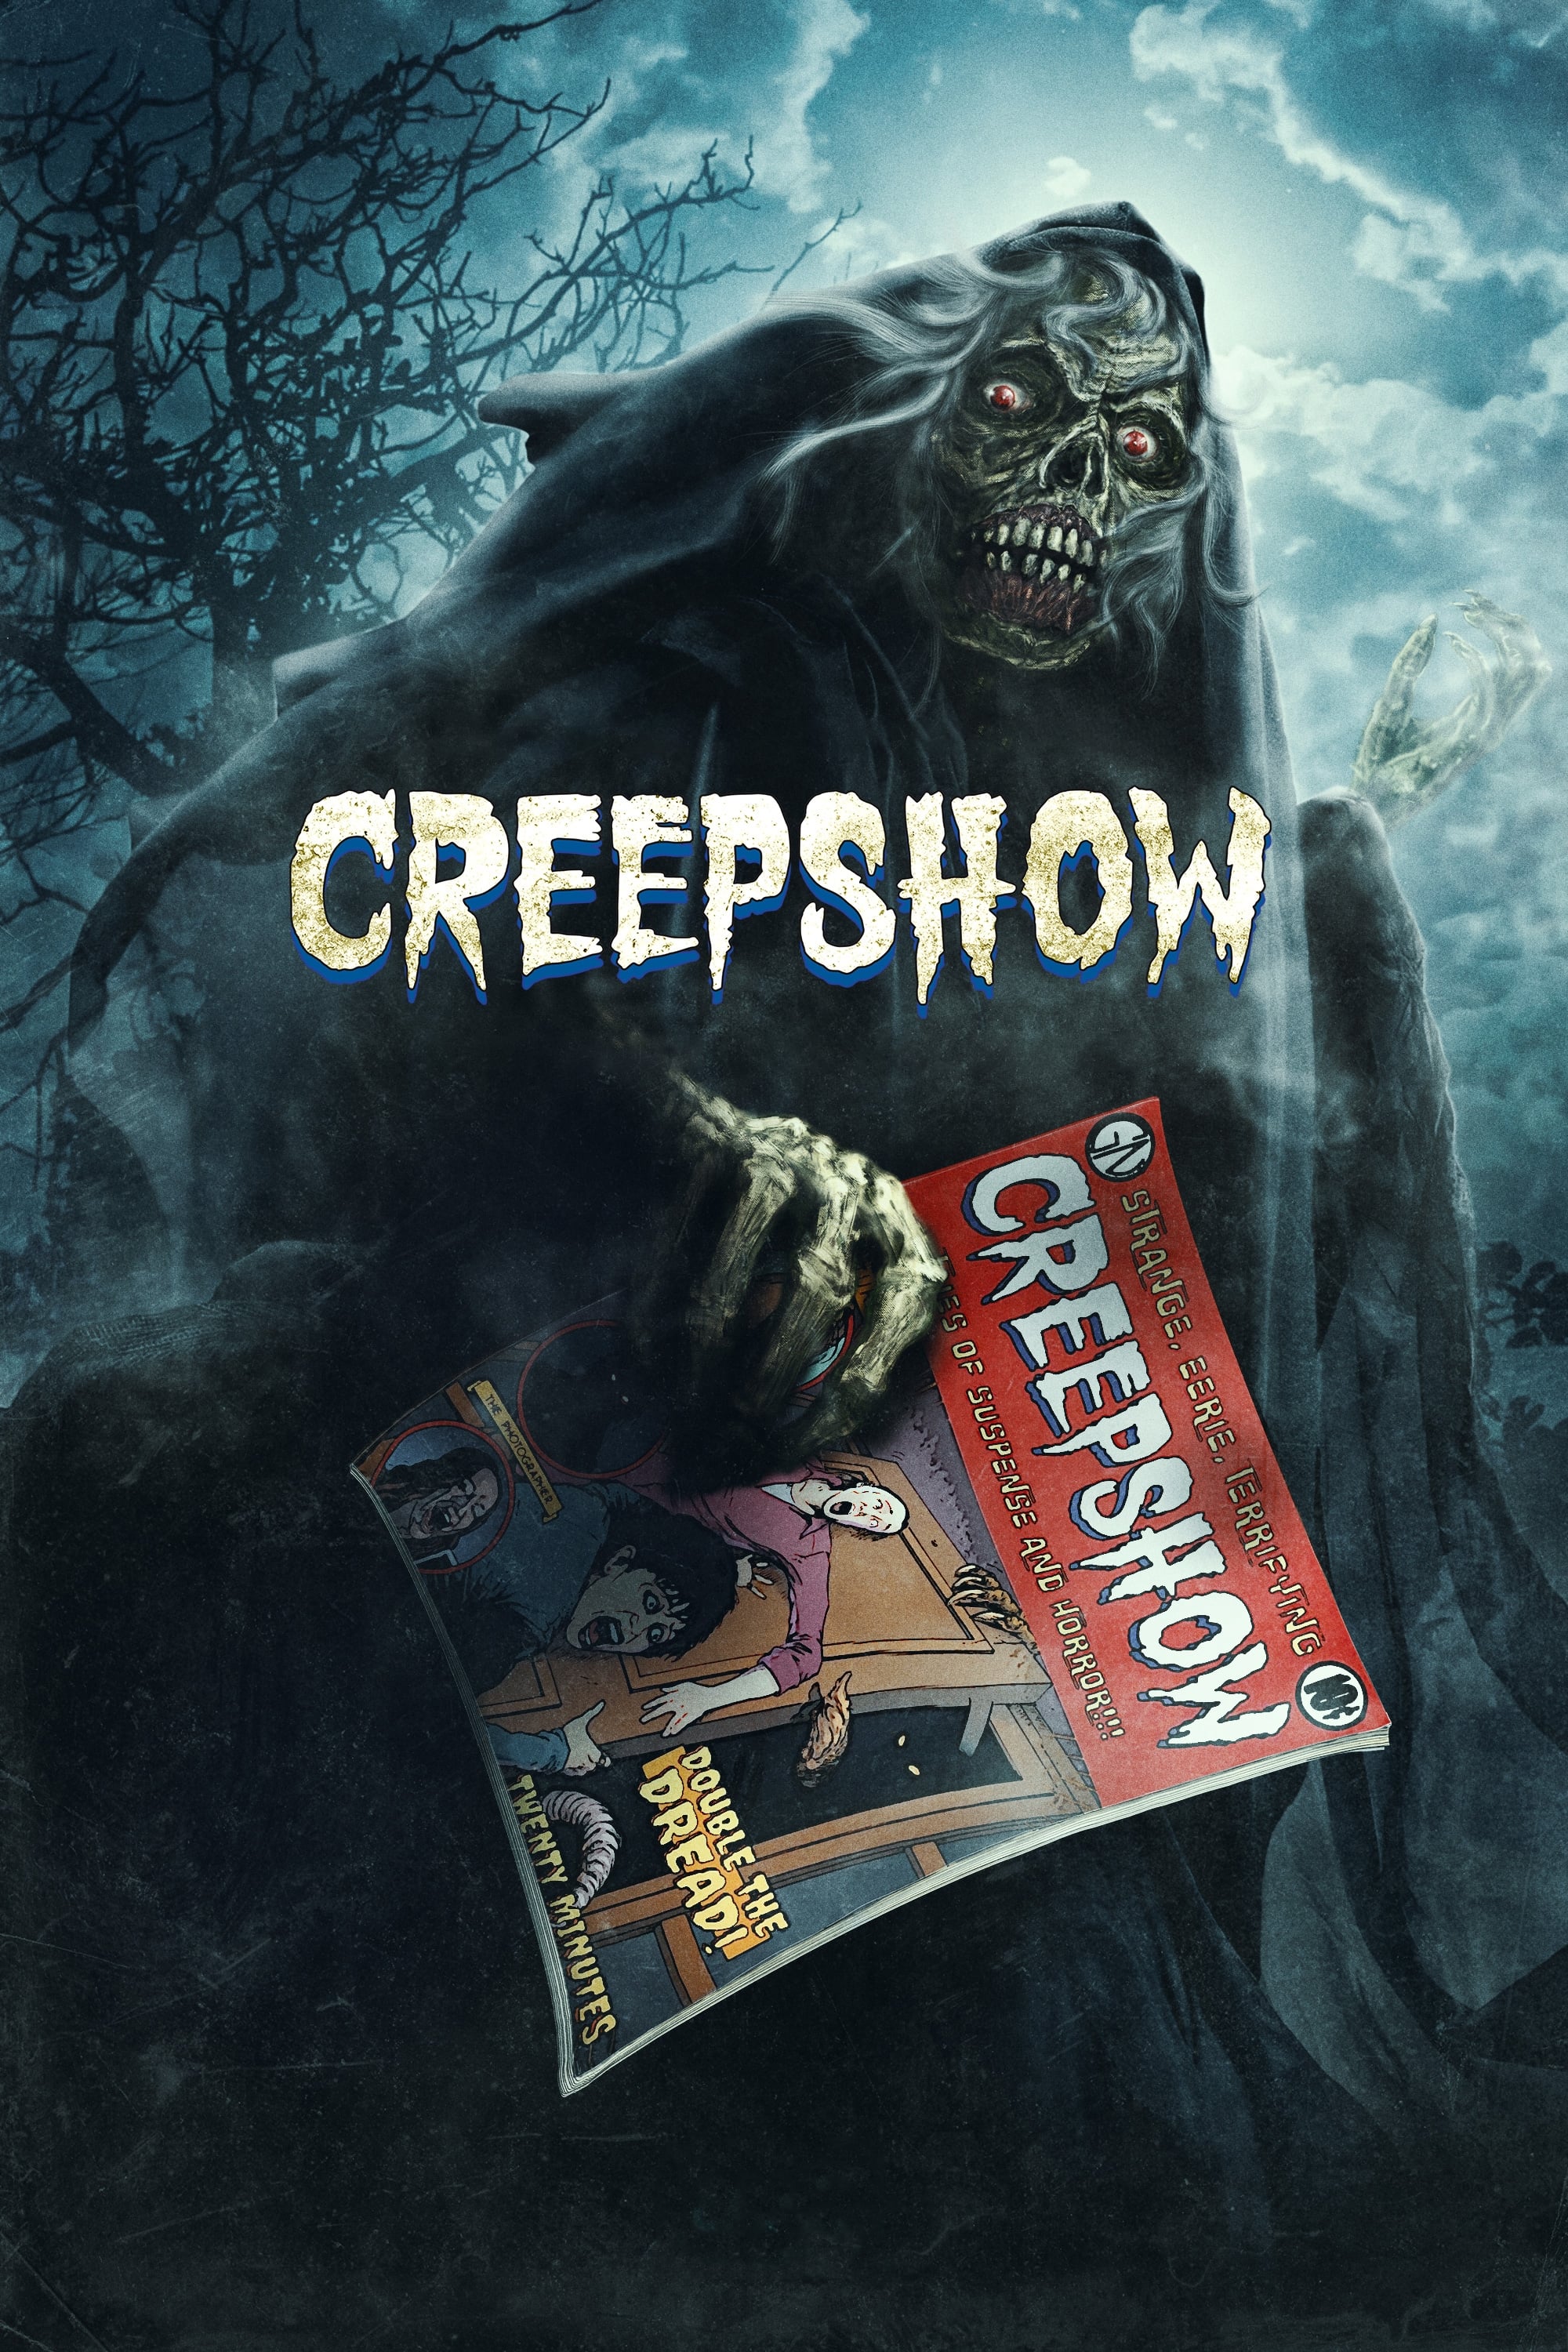 Creepshow (2019)